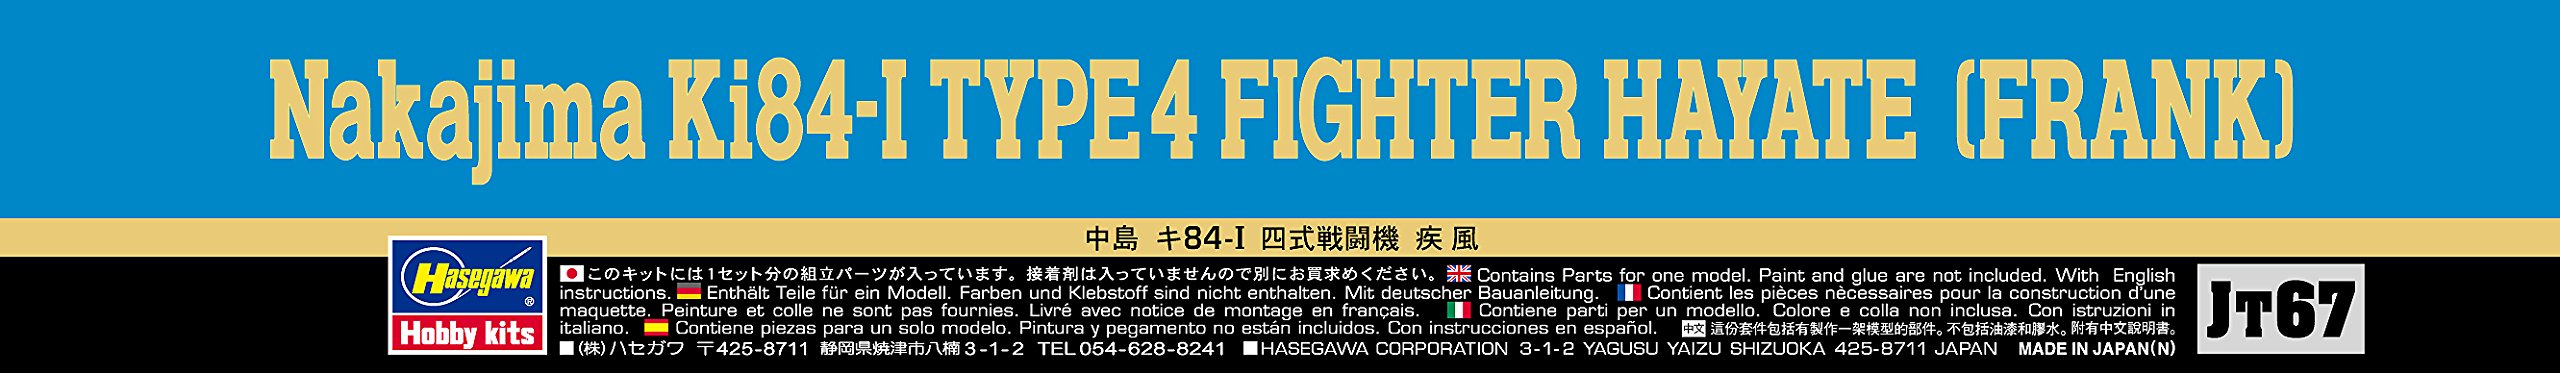 HASEGAWA 1/48 Nakajima Ki84-I Hayate Frank Modèle en plastique